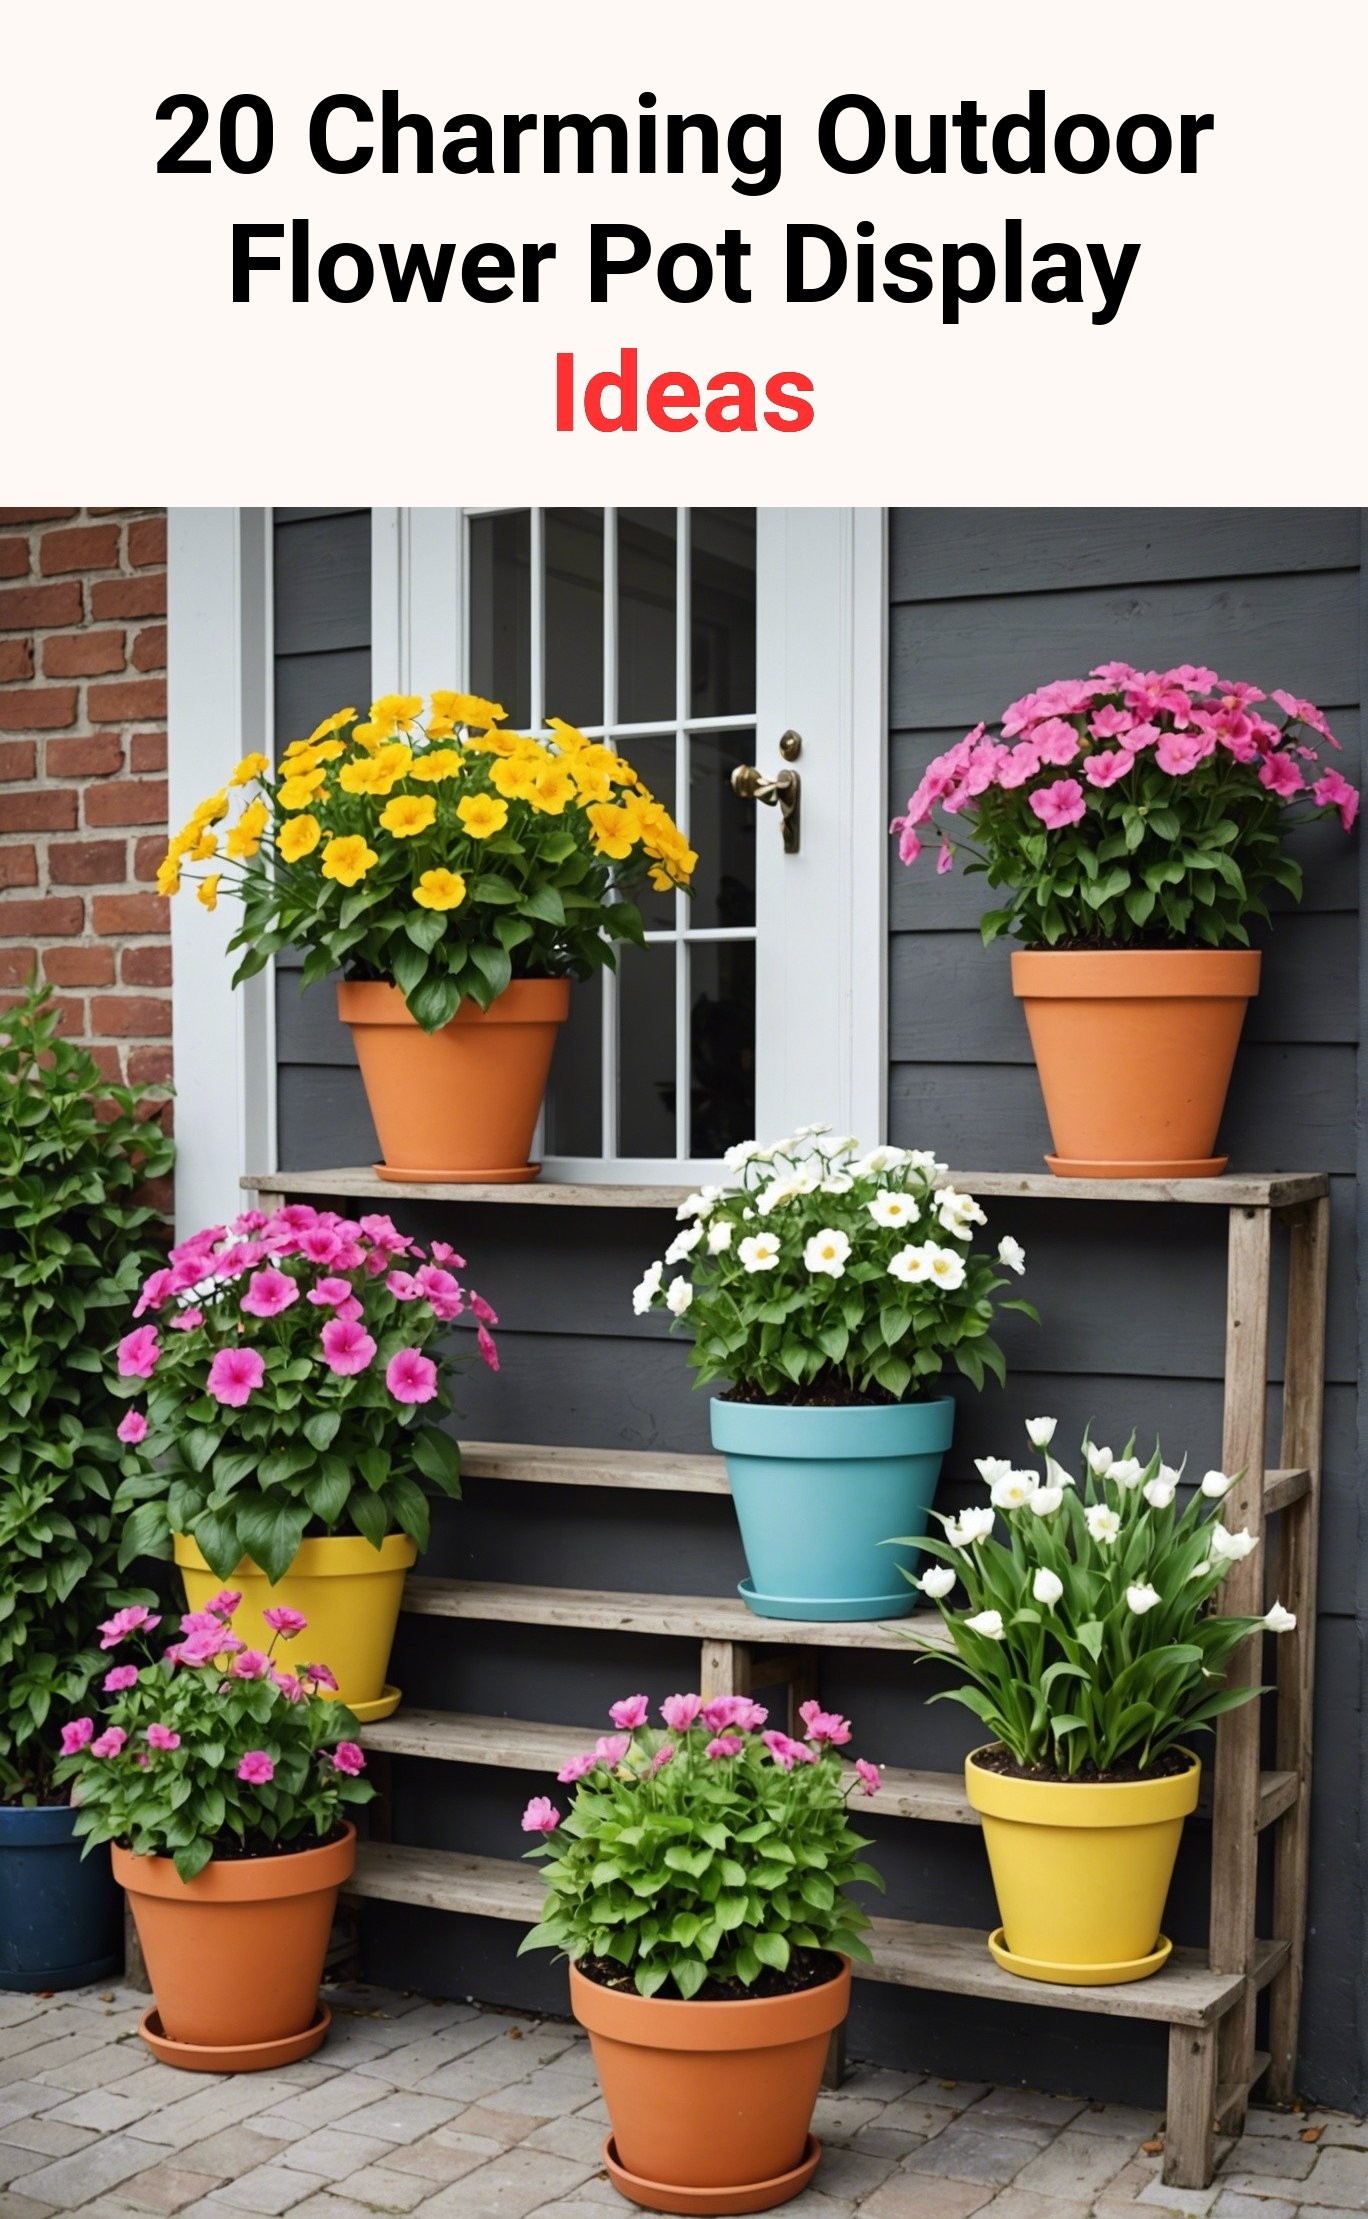 20 Charming Outdoor Flower Pot Display Ideas